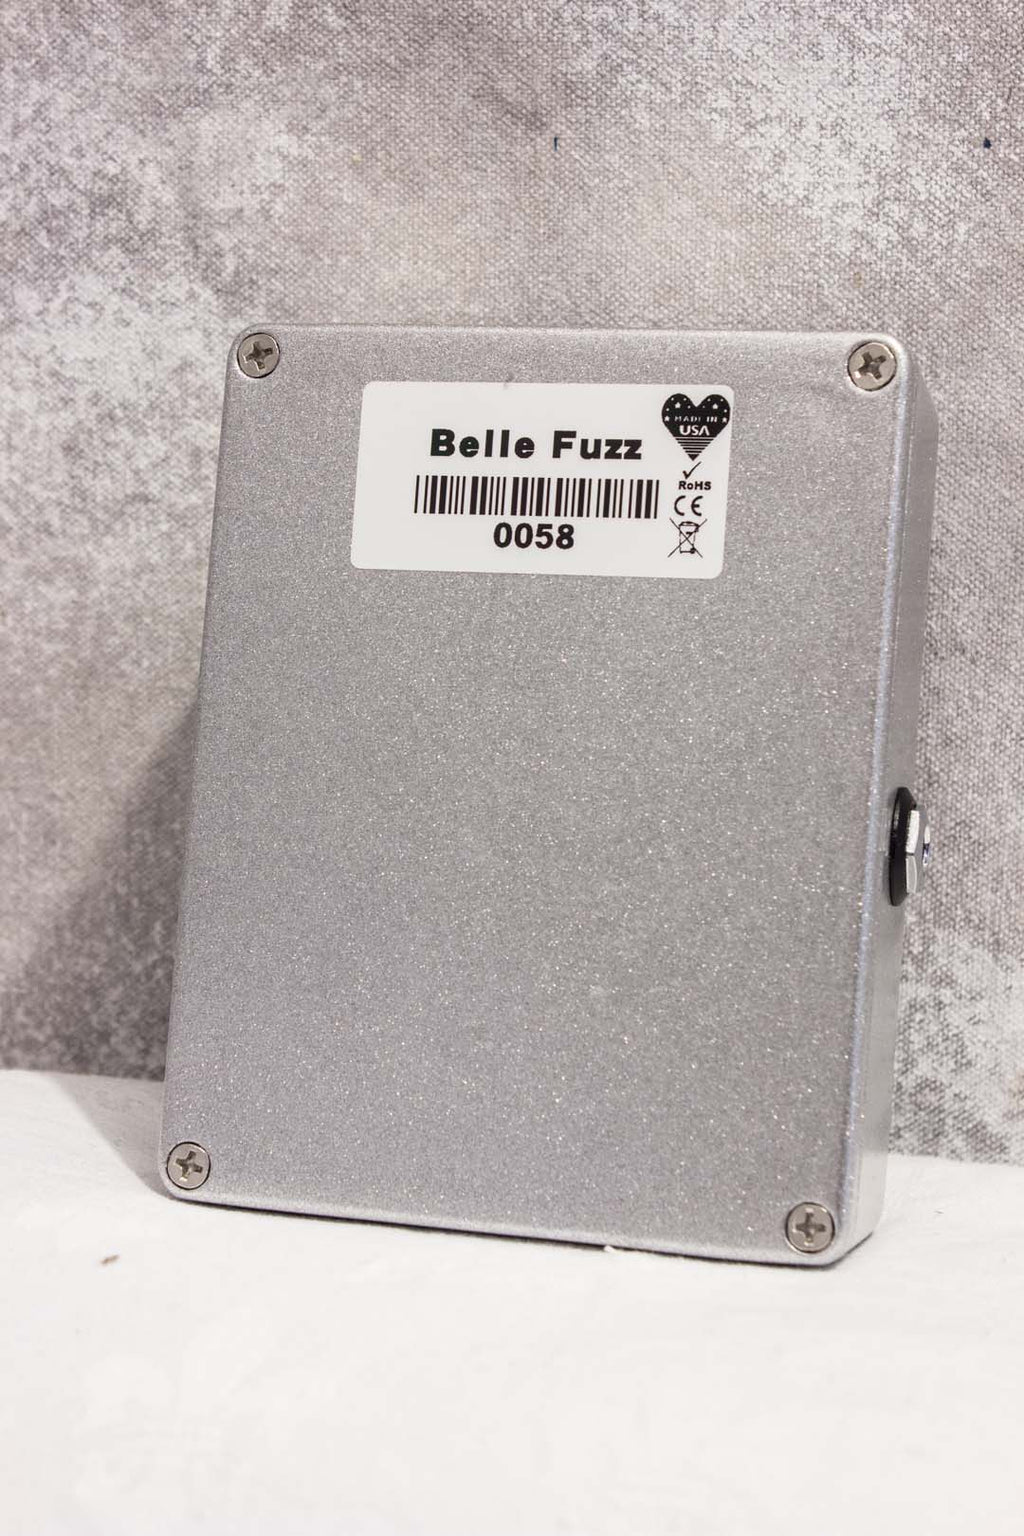 Smart Belle Fuzz Pedal